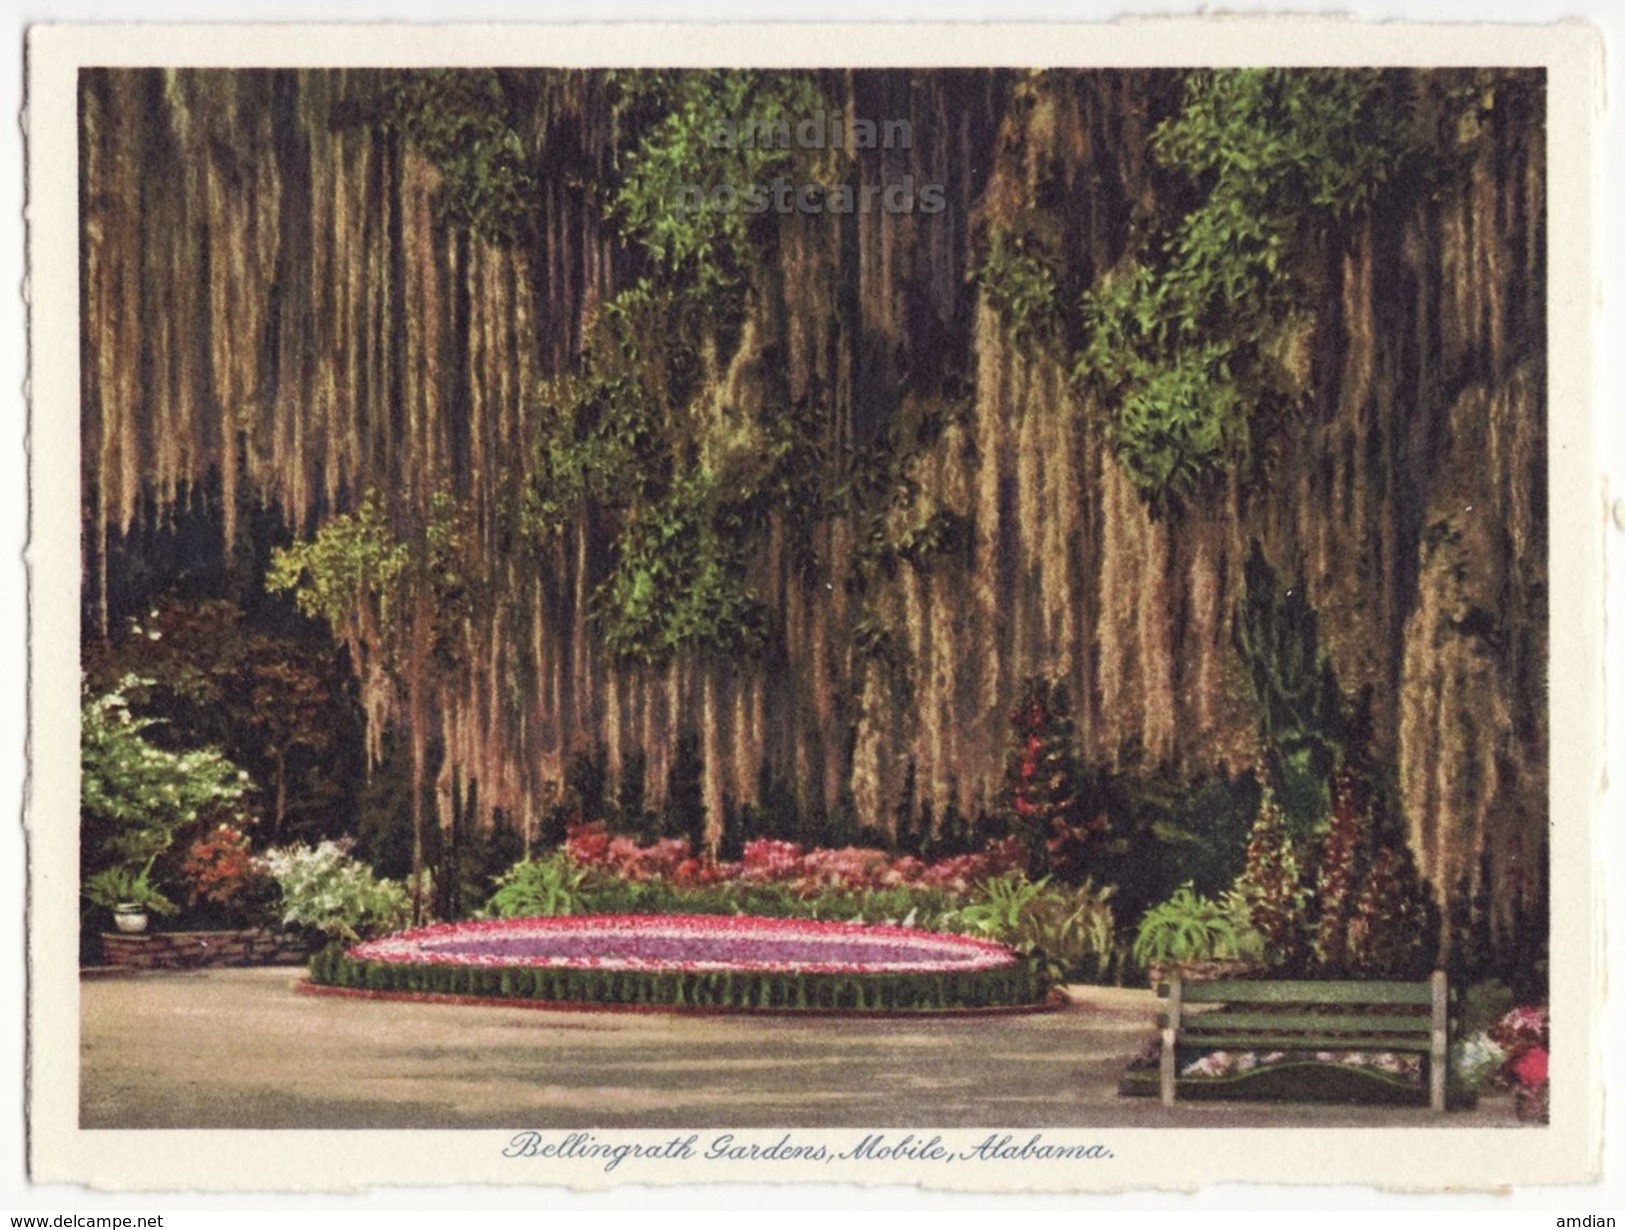 Mobile AL, Bellingrath Gardens 12 x 1930s views lot / collection vintage Alabama postcard set